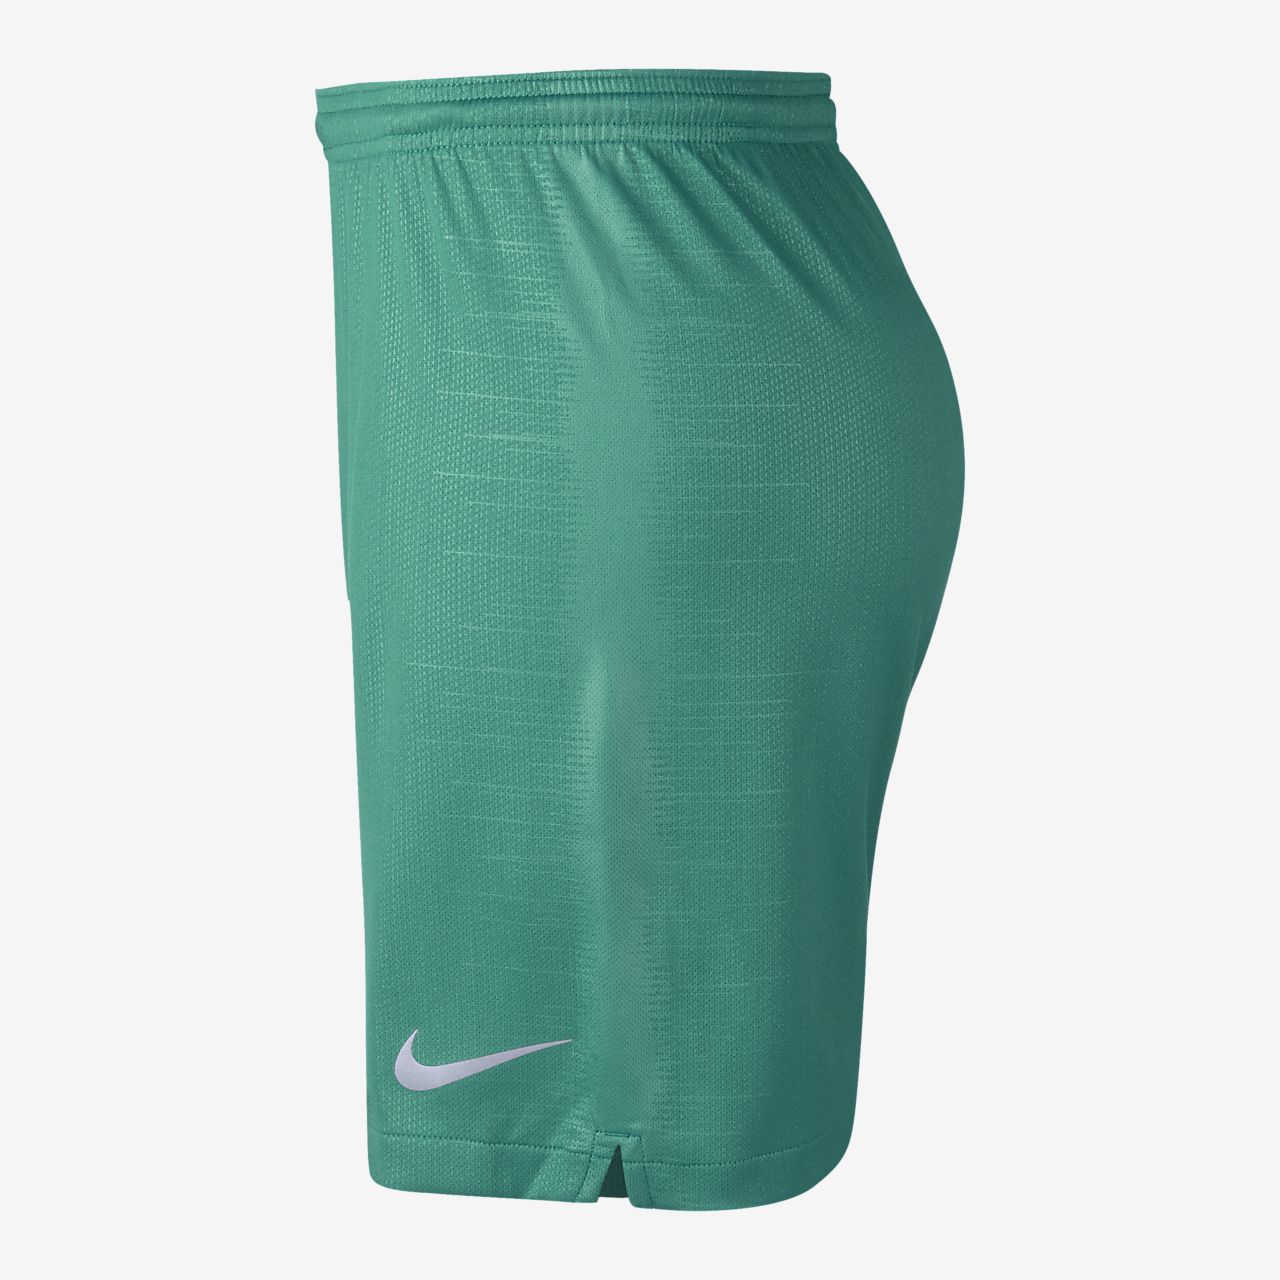 tottenham shorts 2018